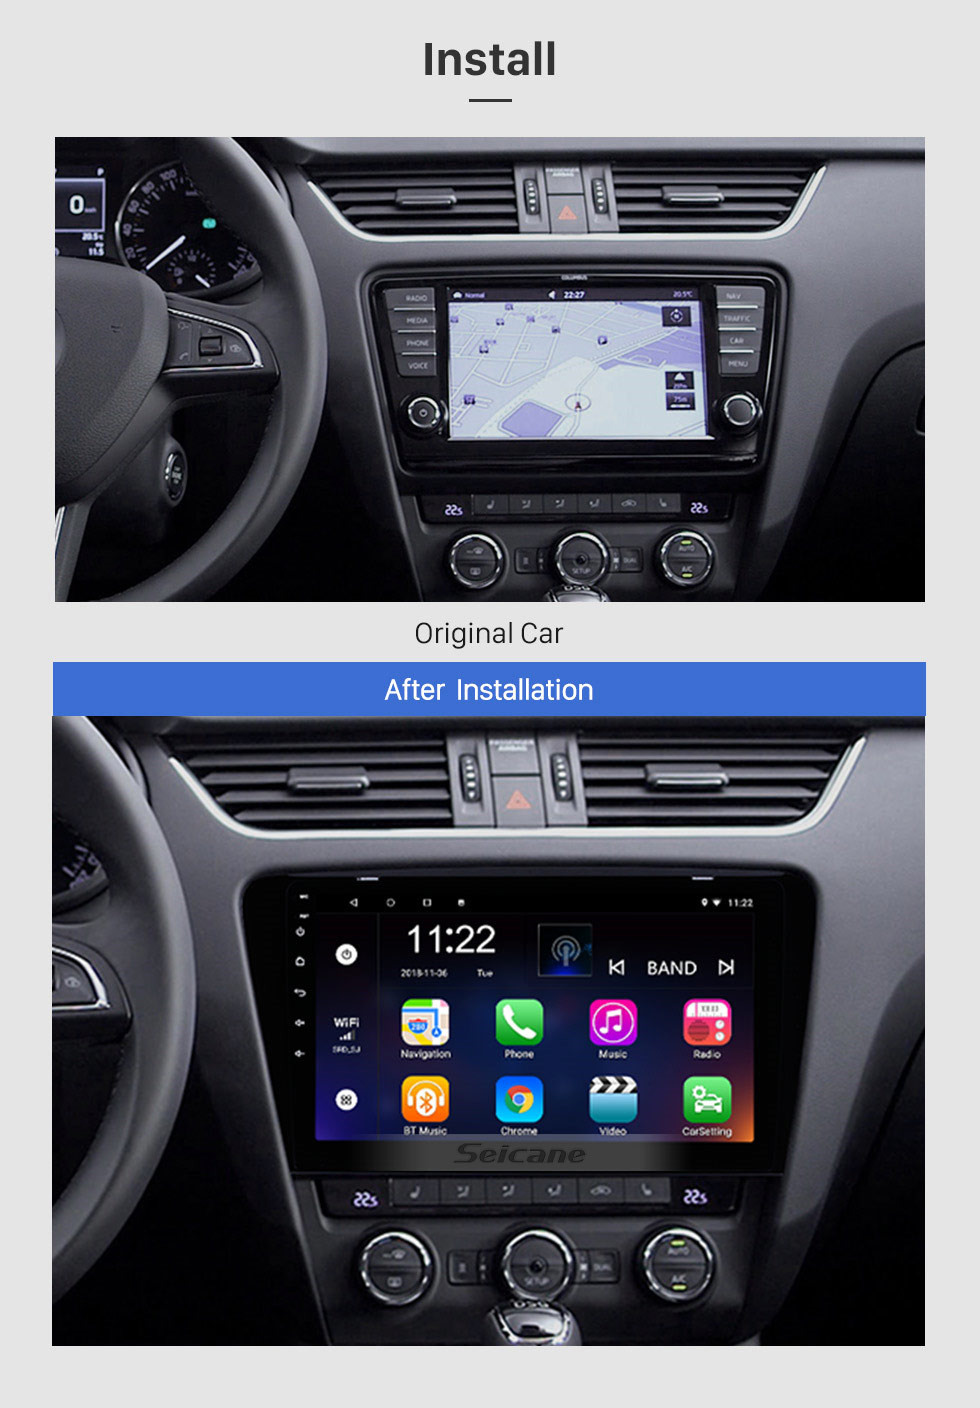 Seicane Androide 10.0 10,1 Zoll HD 1024 * 600-Screen-Autoradio für 2015 2016 SKODA Octavia (UV) GPS-Navigation Bluetooth WIFI USB-Spiegel-Link-Unterstützung DVR OBD2 Lenkradsteuerungs-Unterstützungskamera